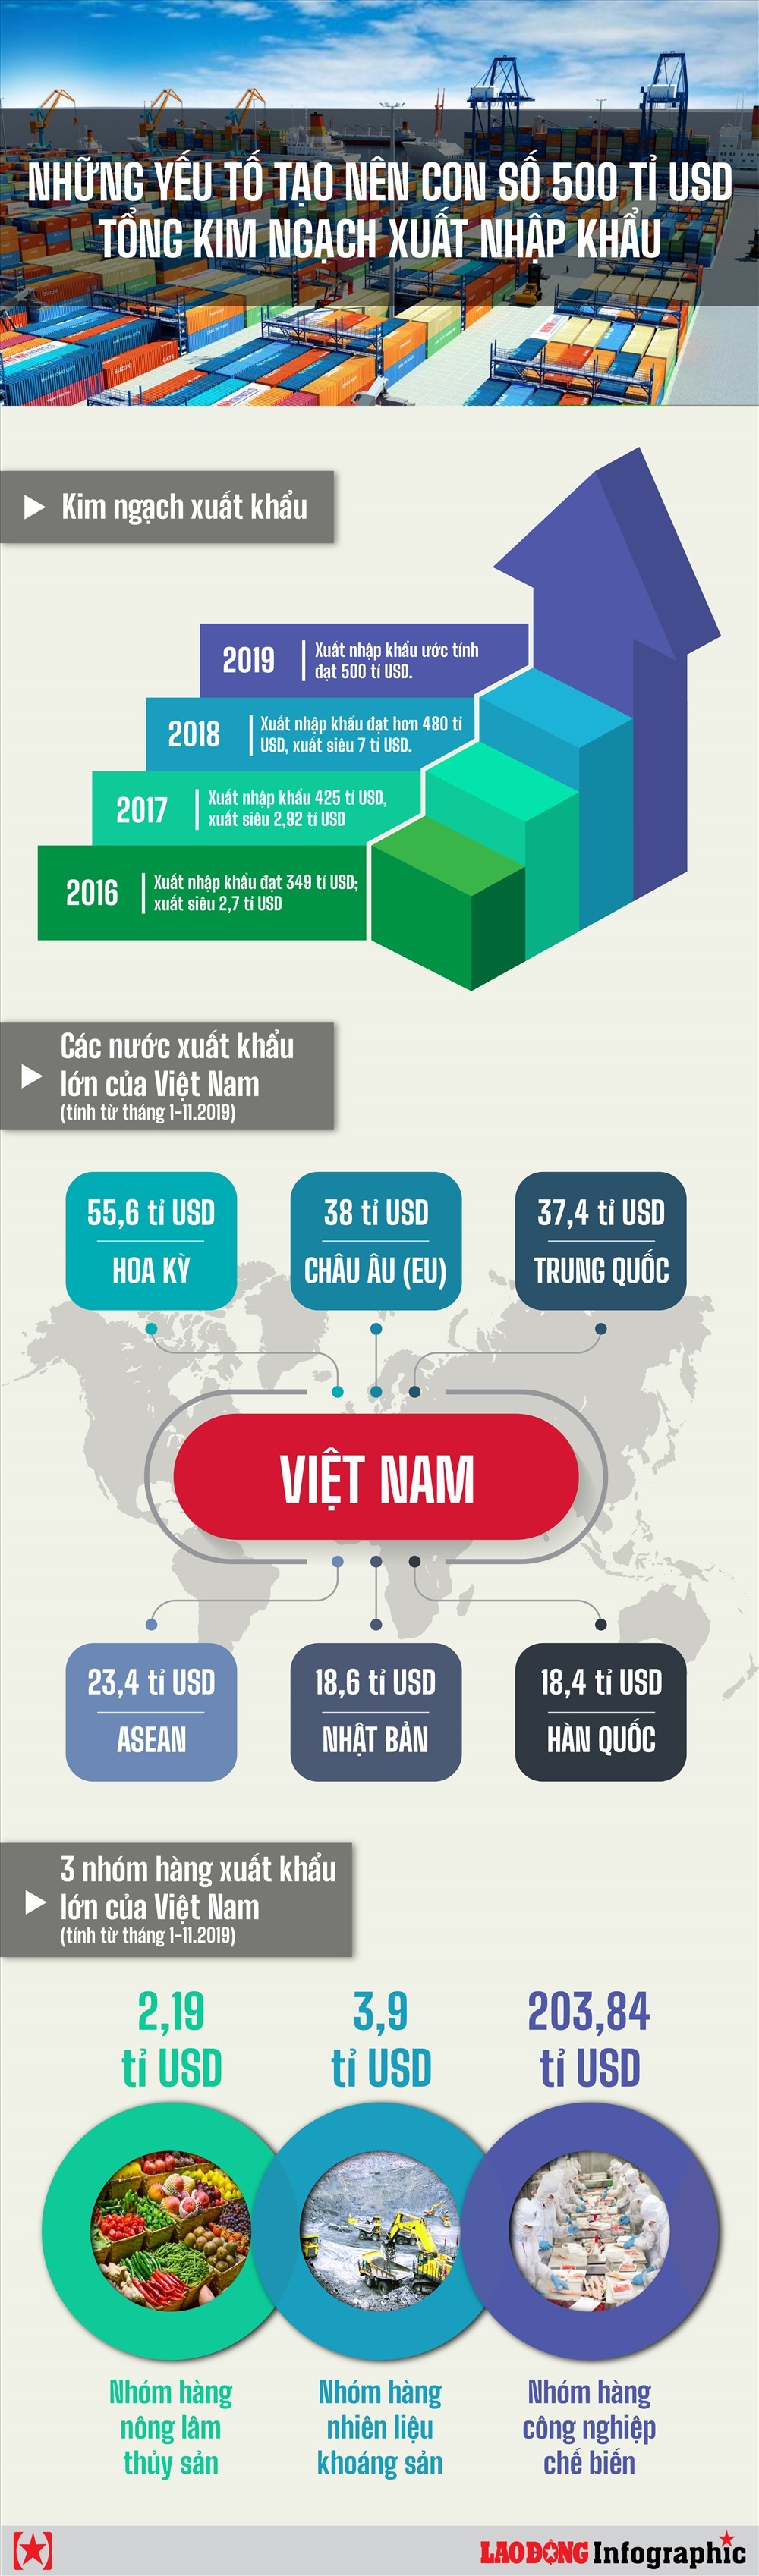 infographic 500 ti usd tong kim ngach xuat nhap khau nam trong tam tay